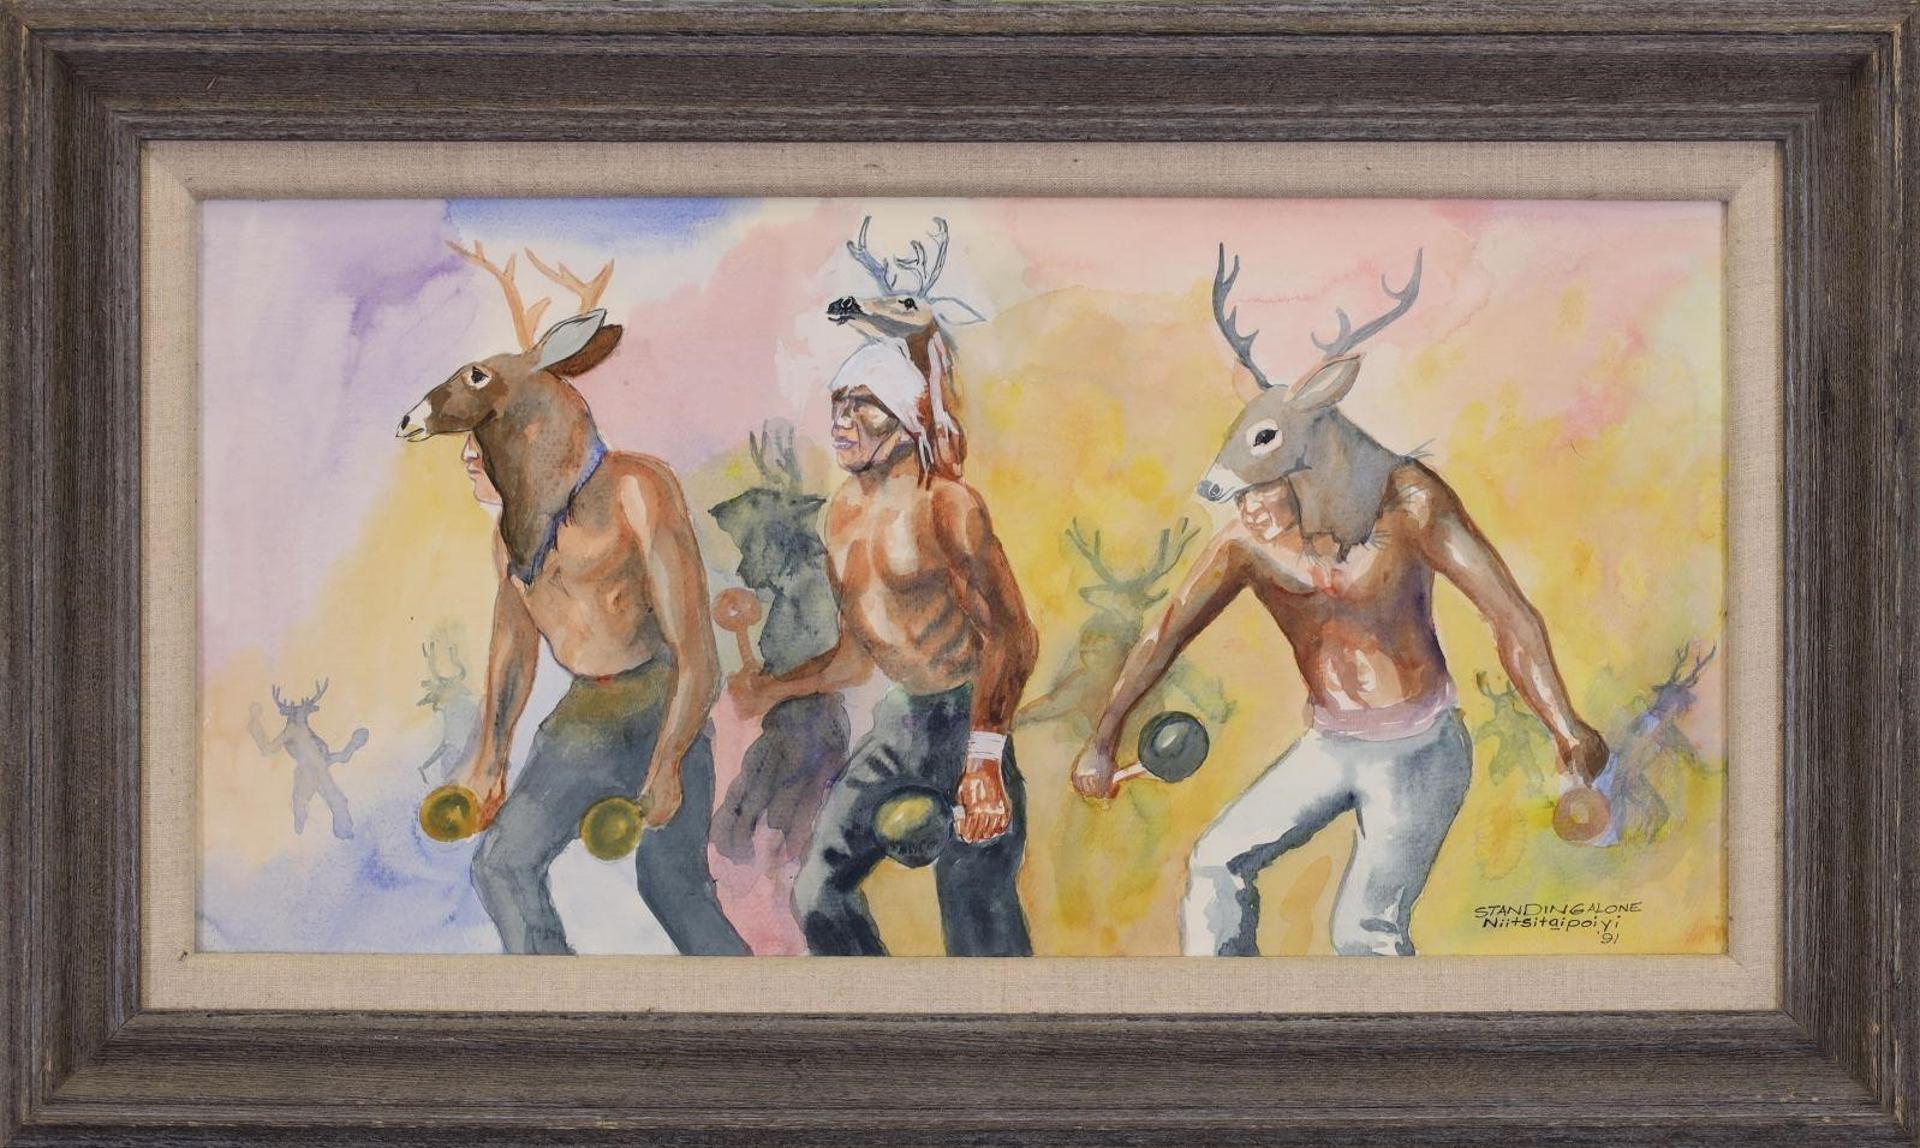 Henry Standing Alone Niitsitaipoiyi (1935-2010) - Untitled; Deer Dancers; 1991